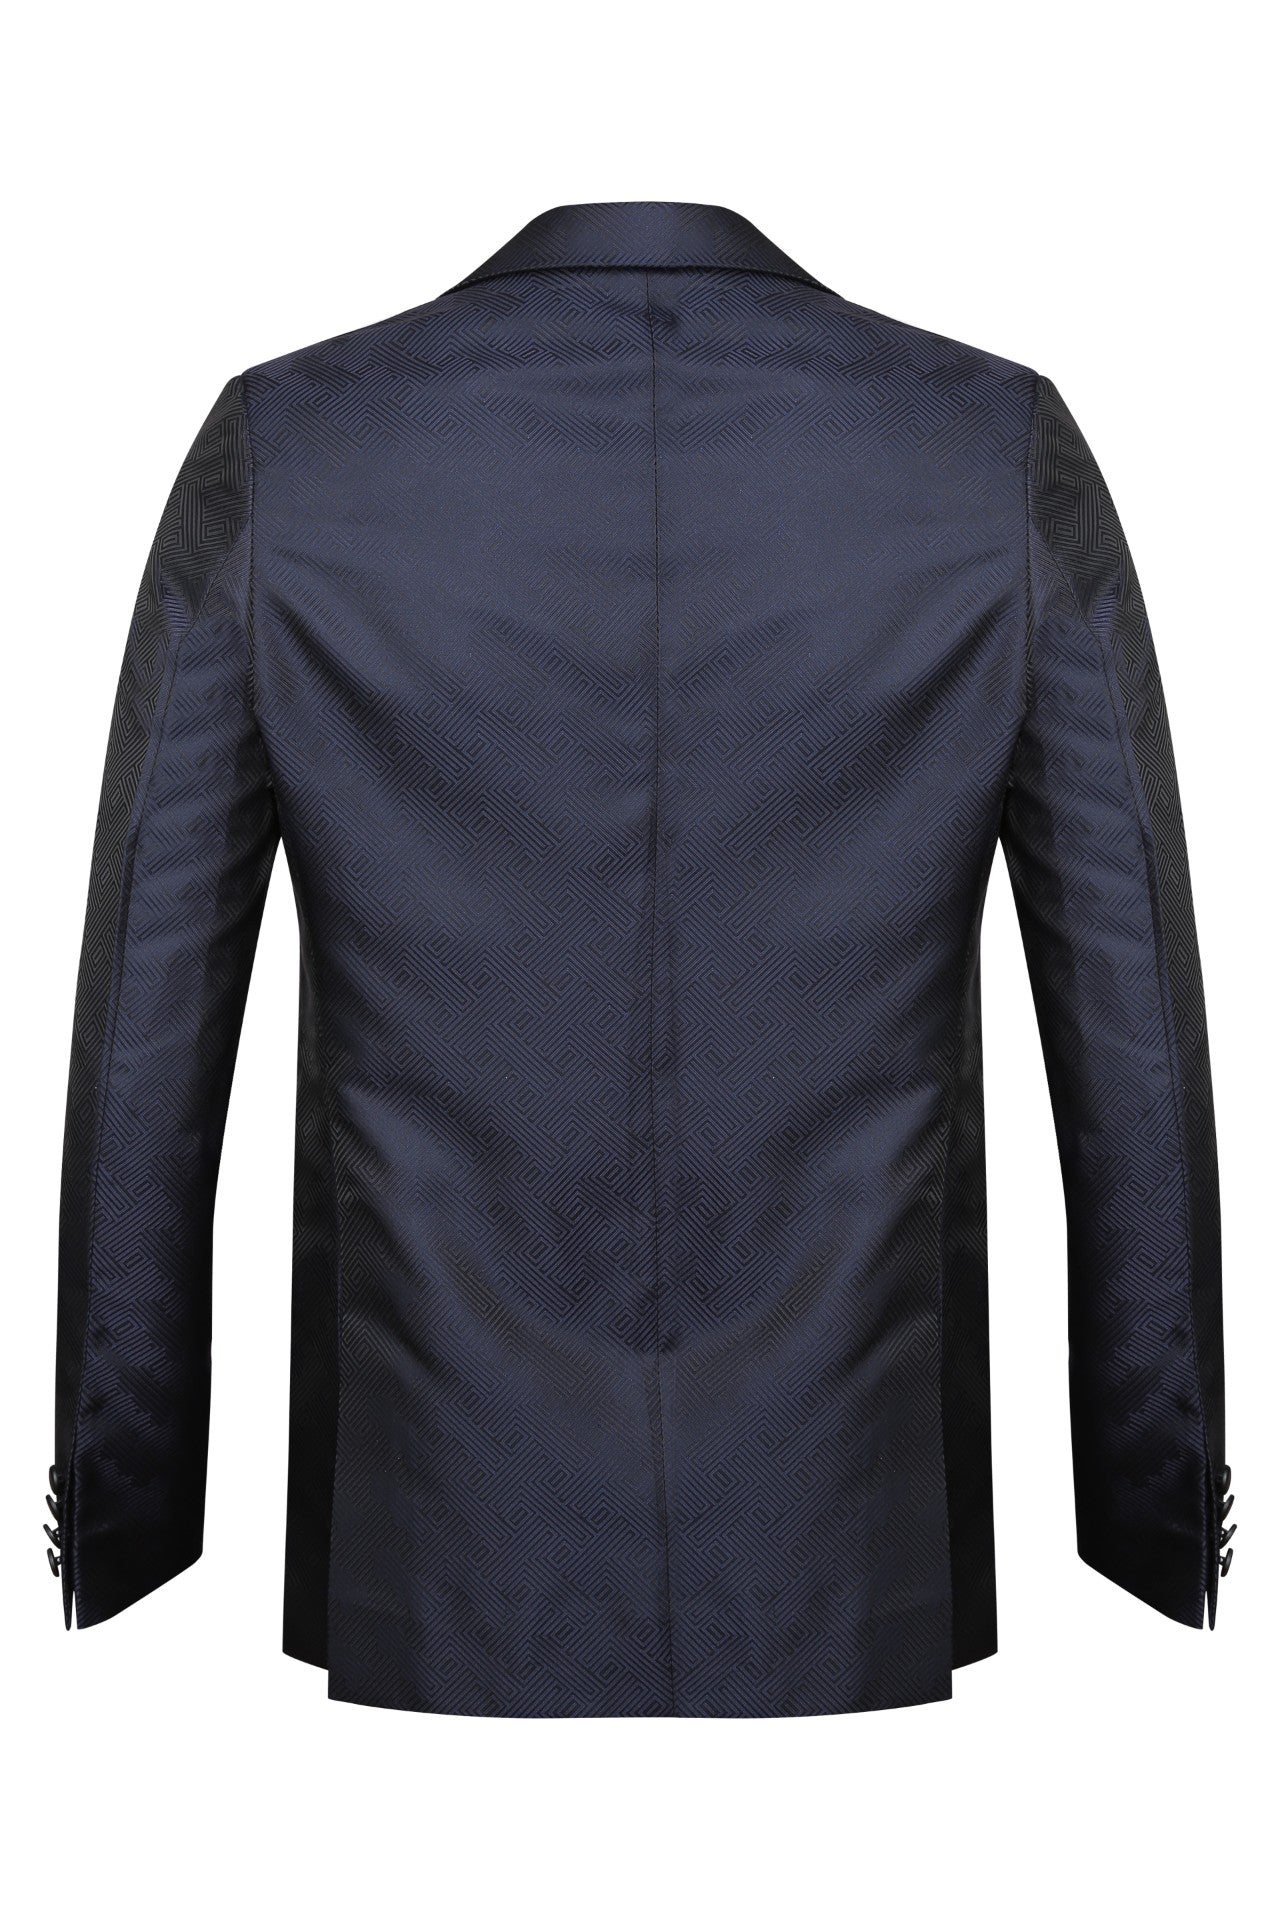 Blue single button tuxedo in self jacquard suiting fabric